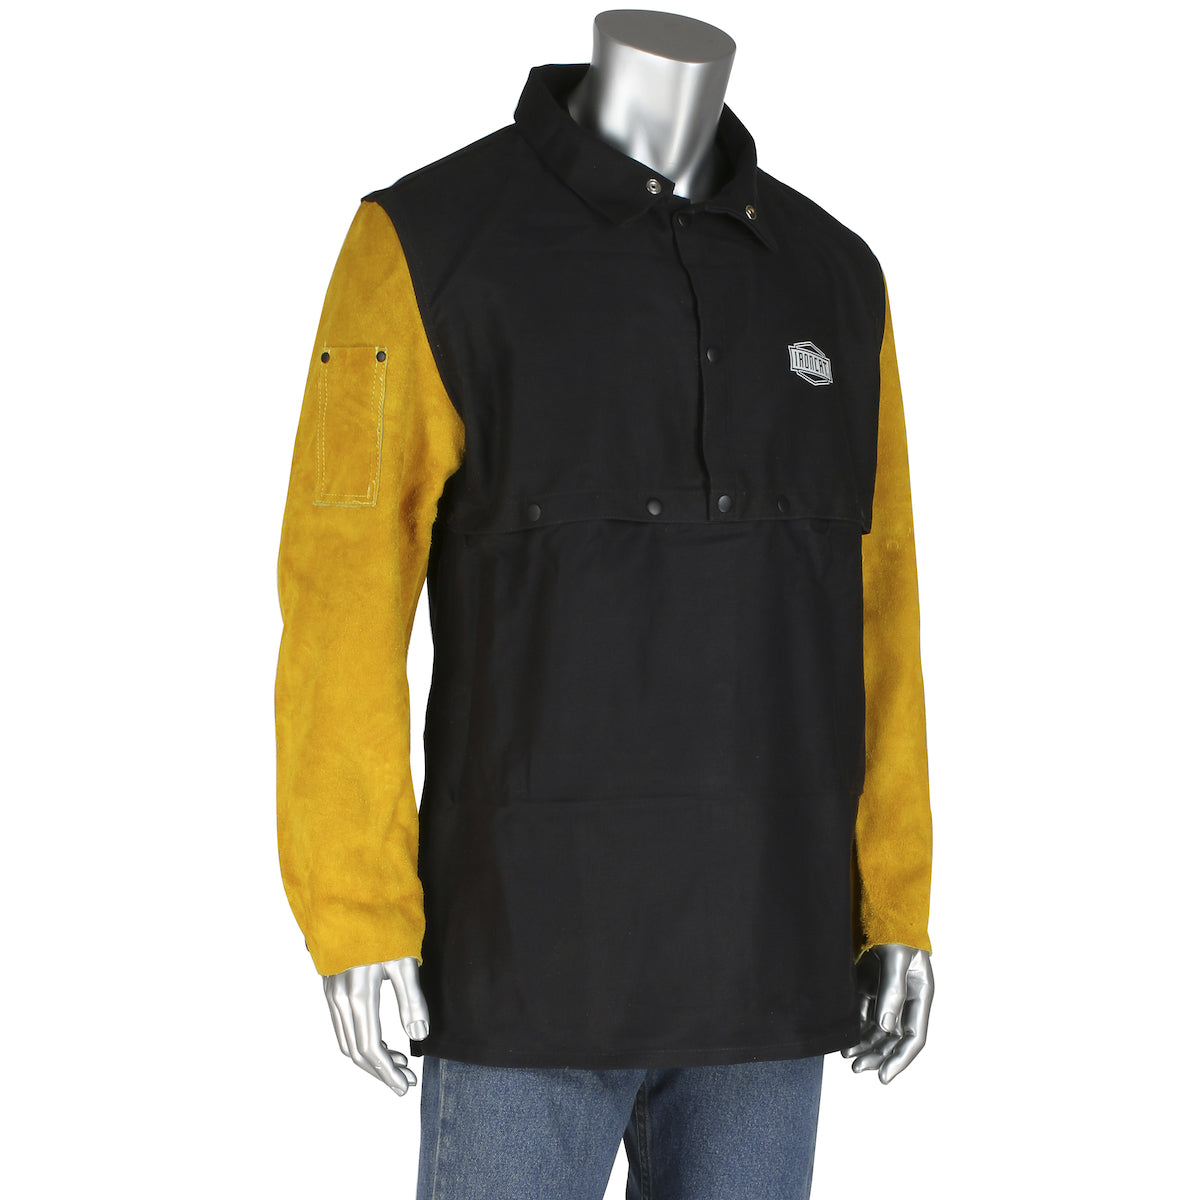 Ironcat 8051/5XL Combination FR Cotton / Leather Cape Sleeve with Apron